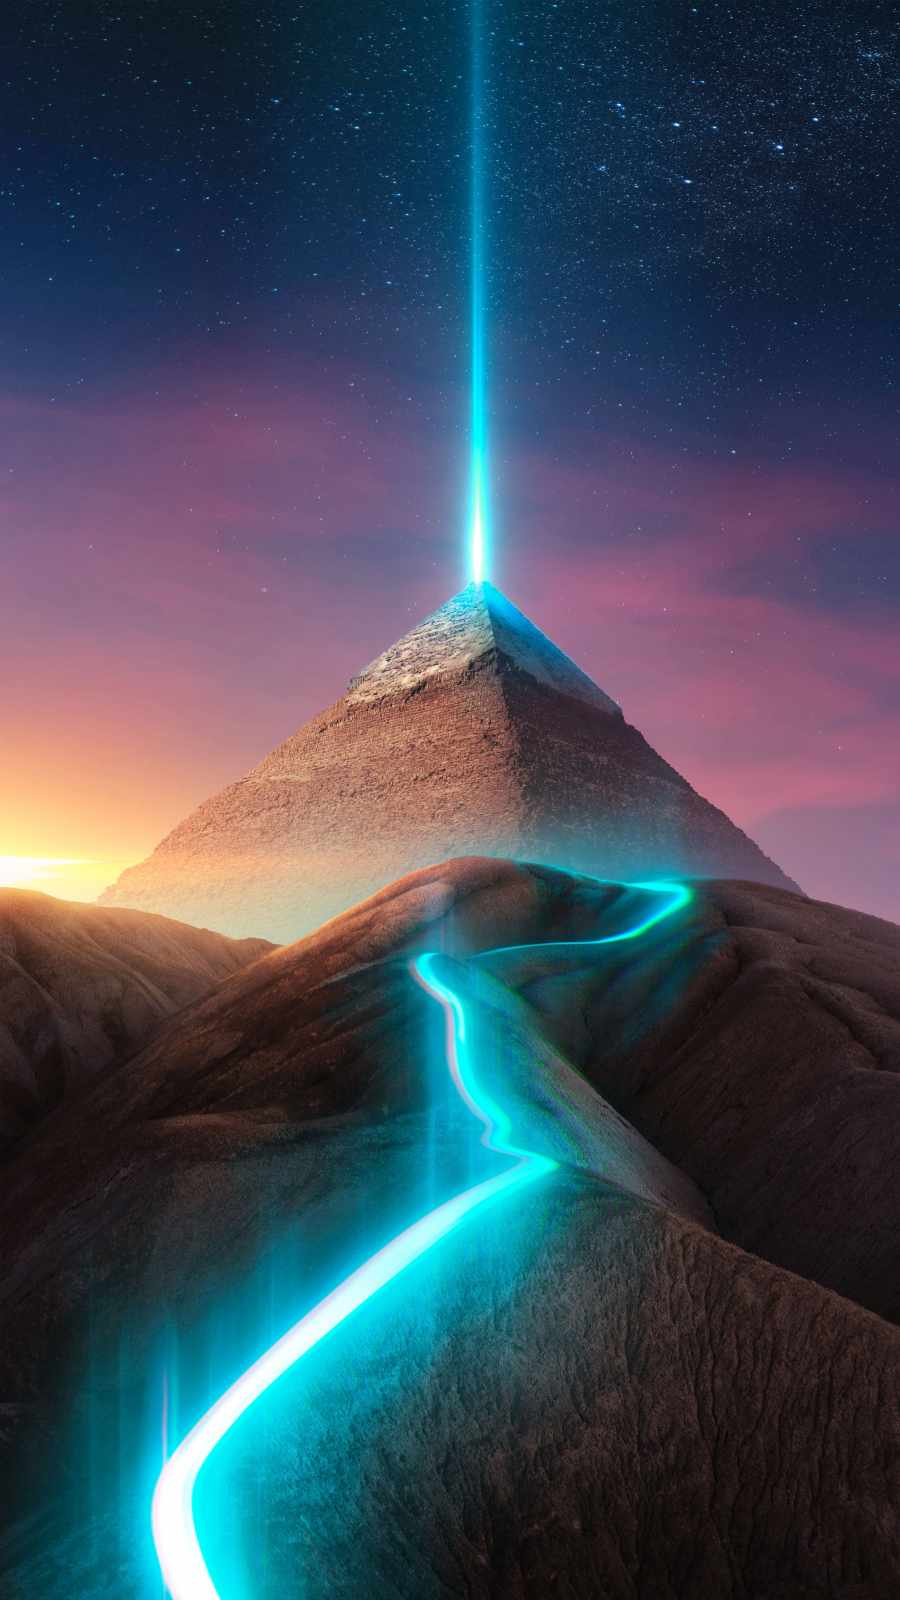 Pyramid Light iPhone Wallpaper